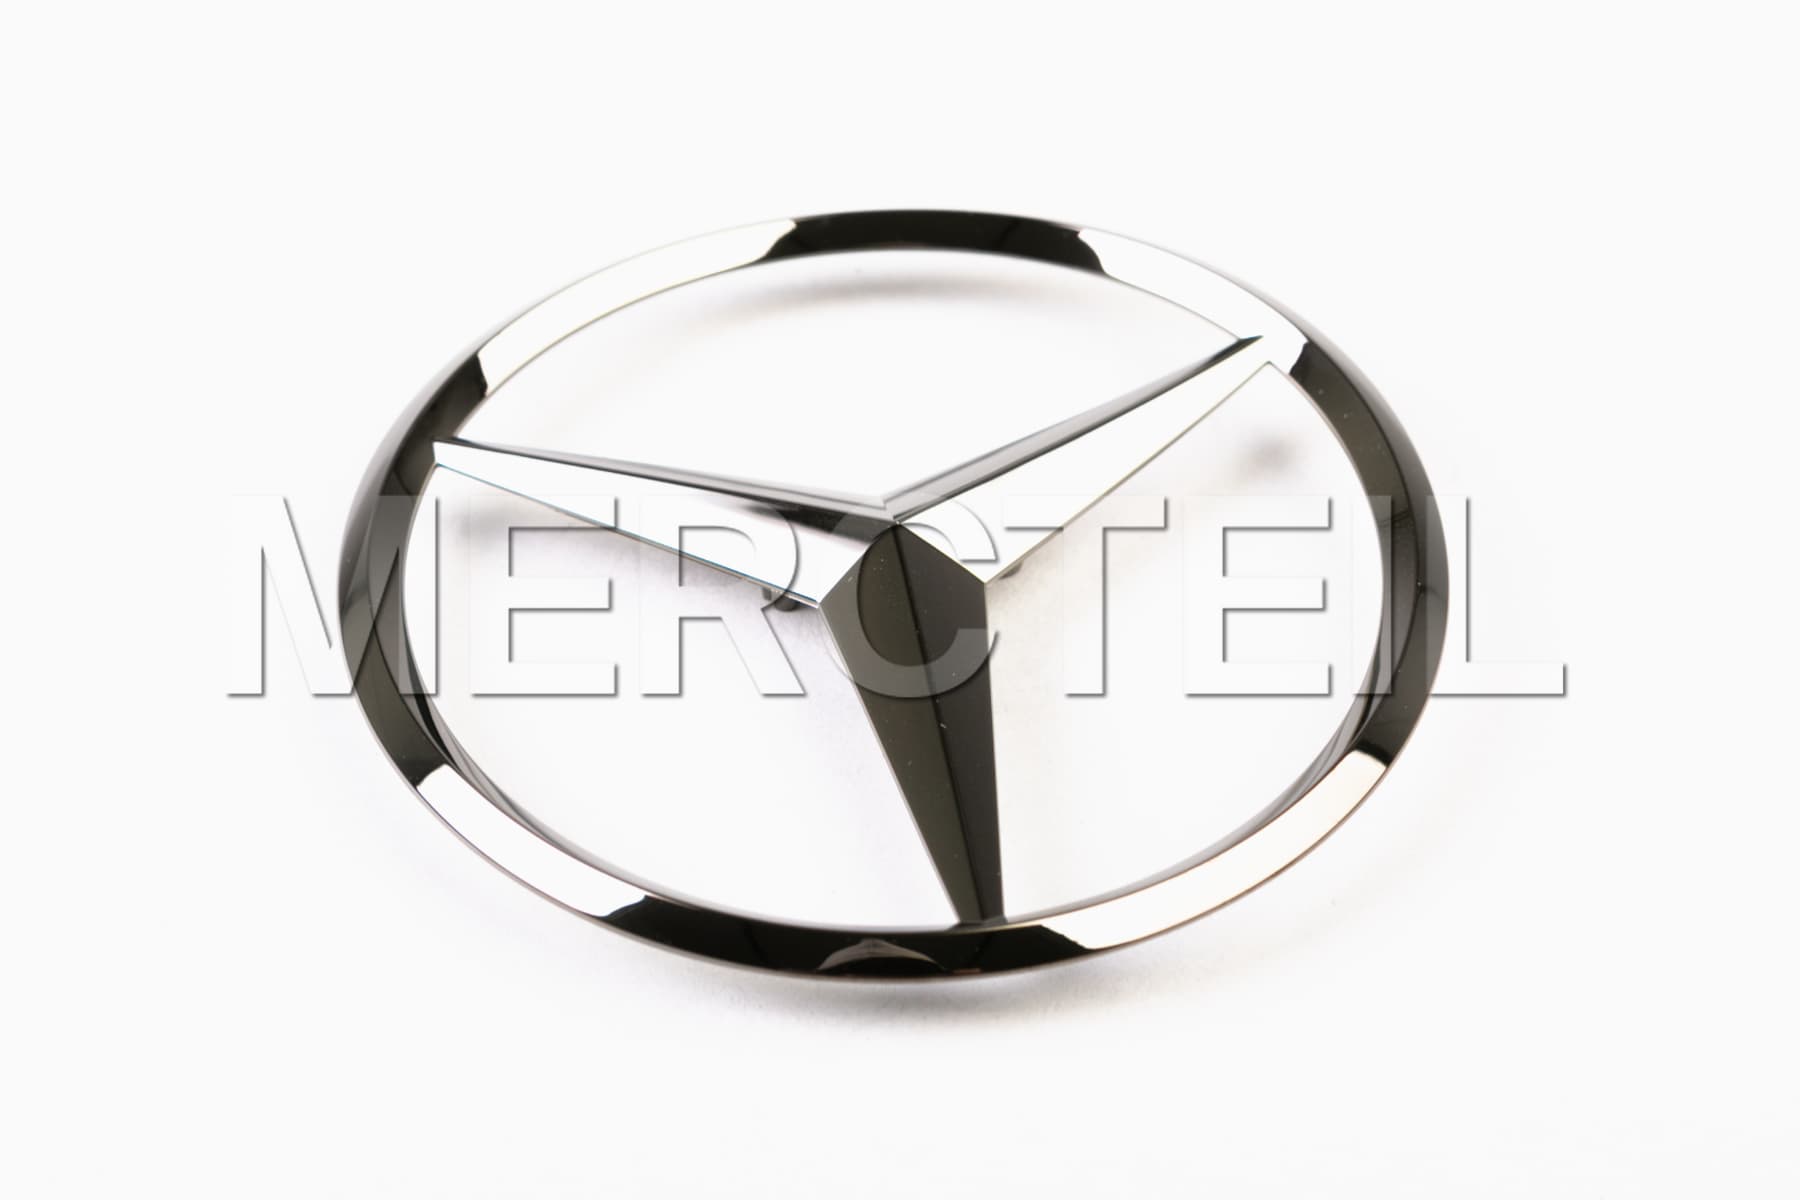 Chrome Back Trunk Star FLAT Mercedes Emblem Badge Covered With